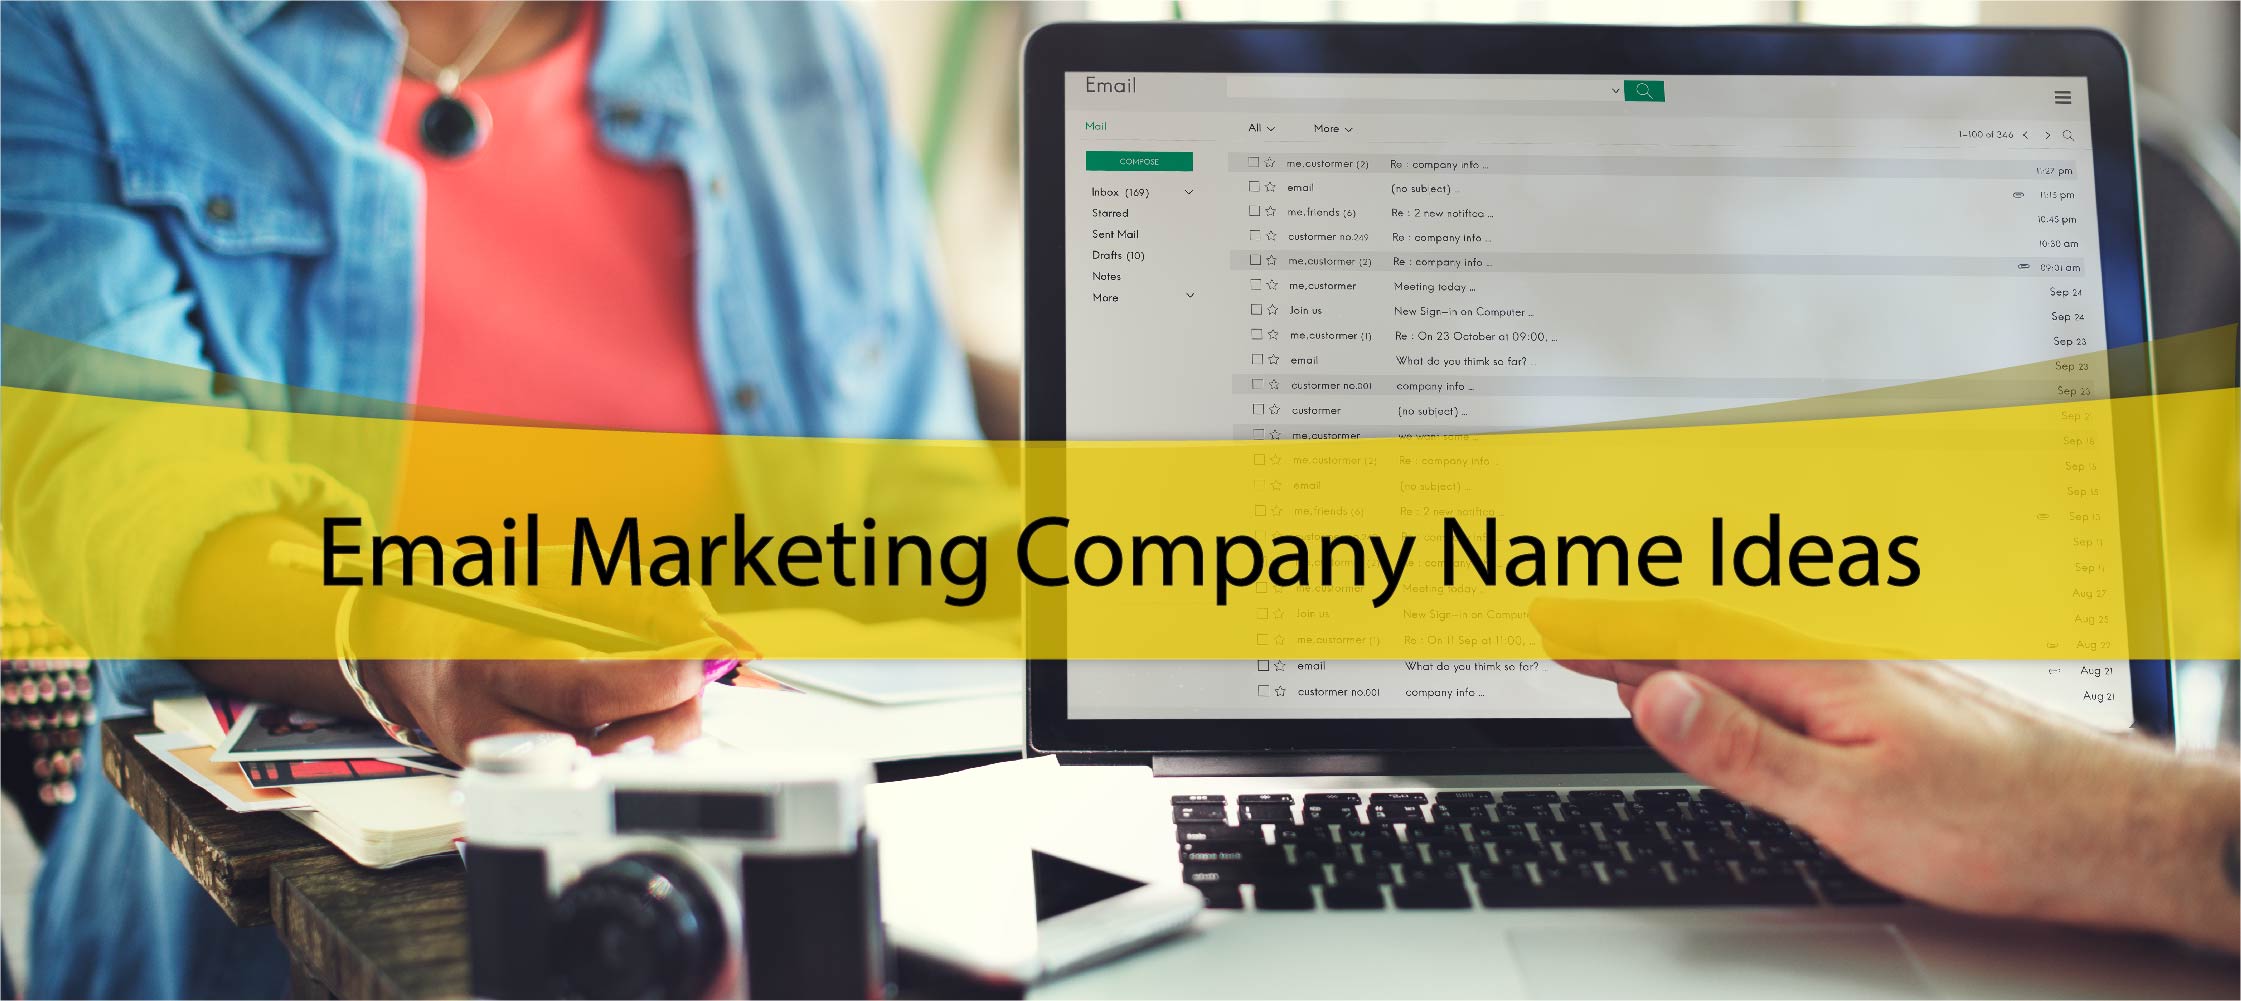 Email Marketing Company Name Ideas